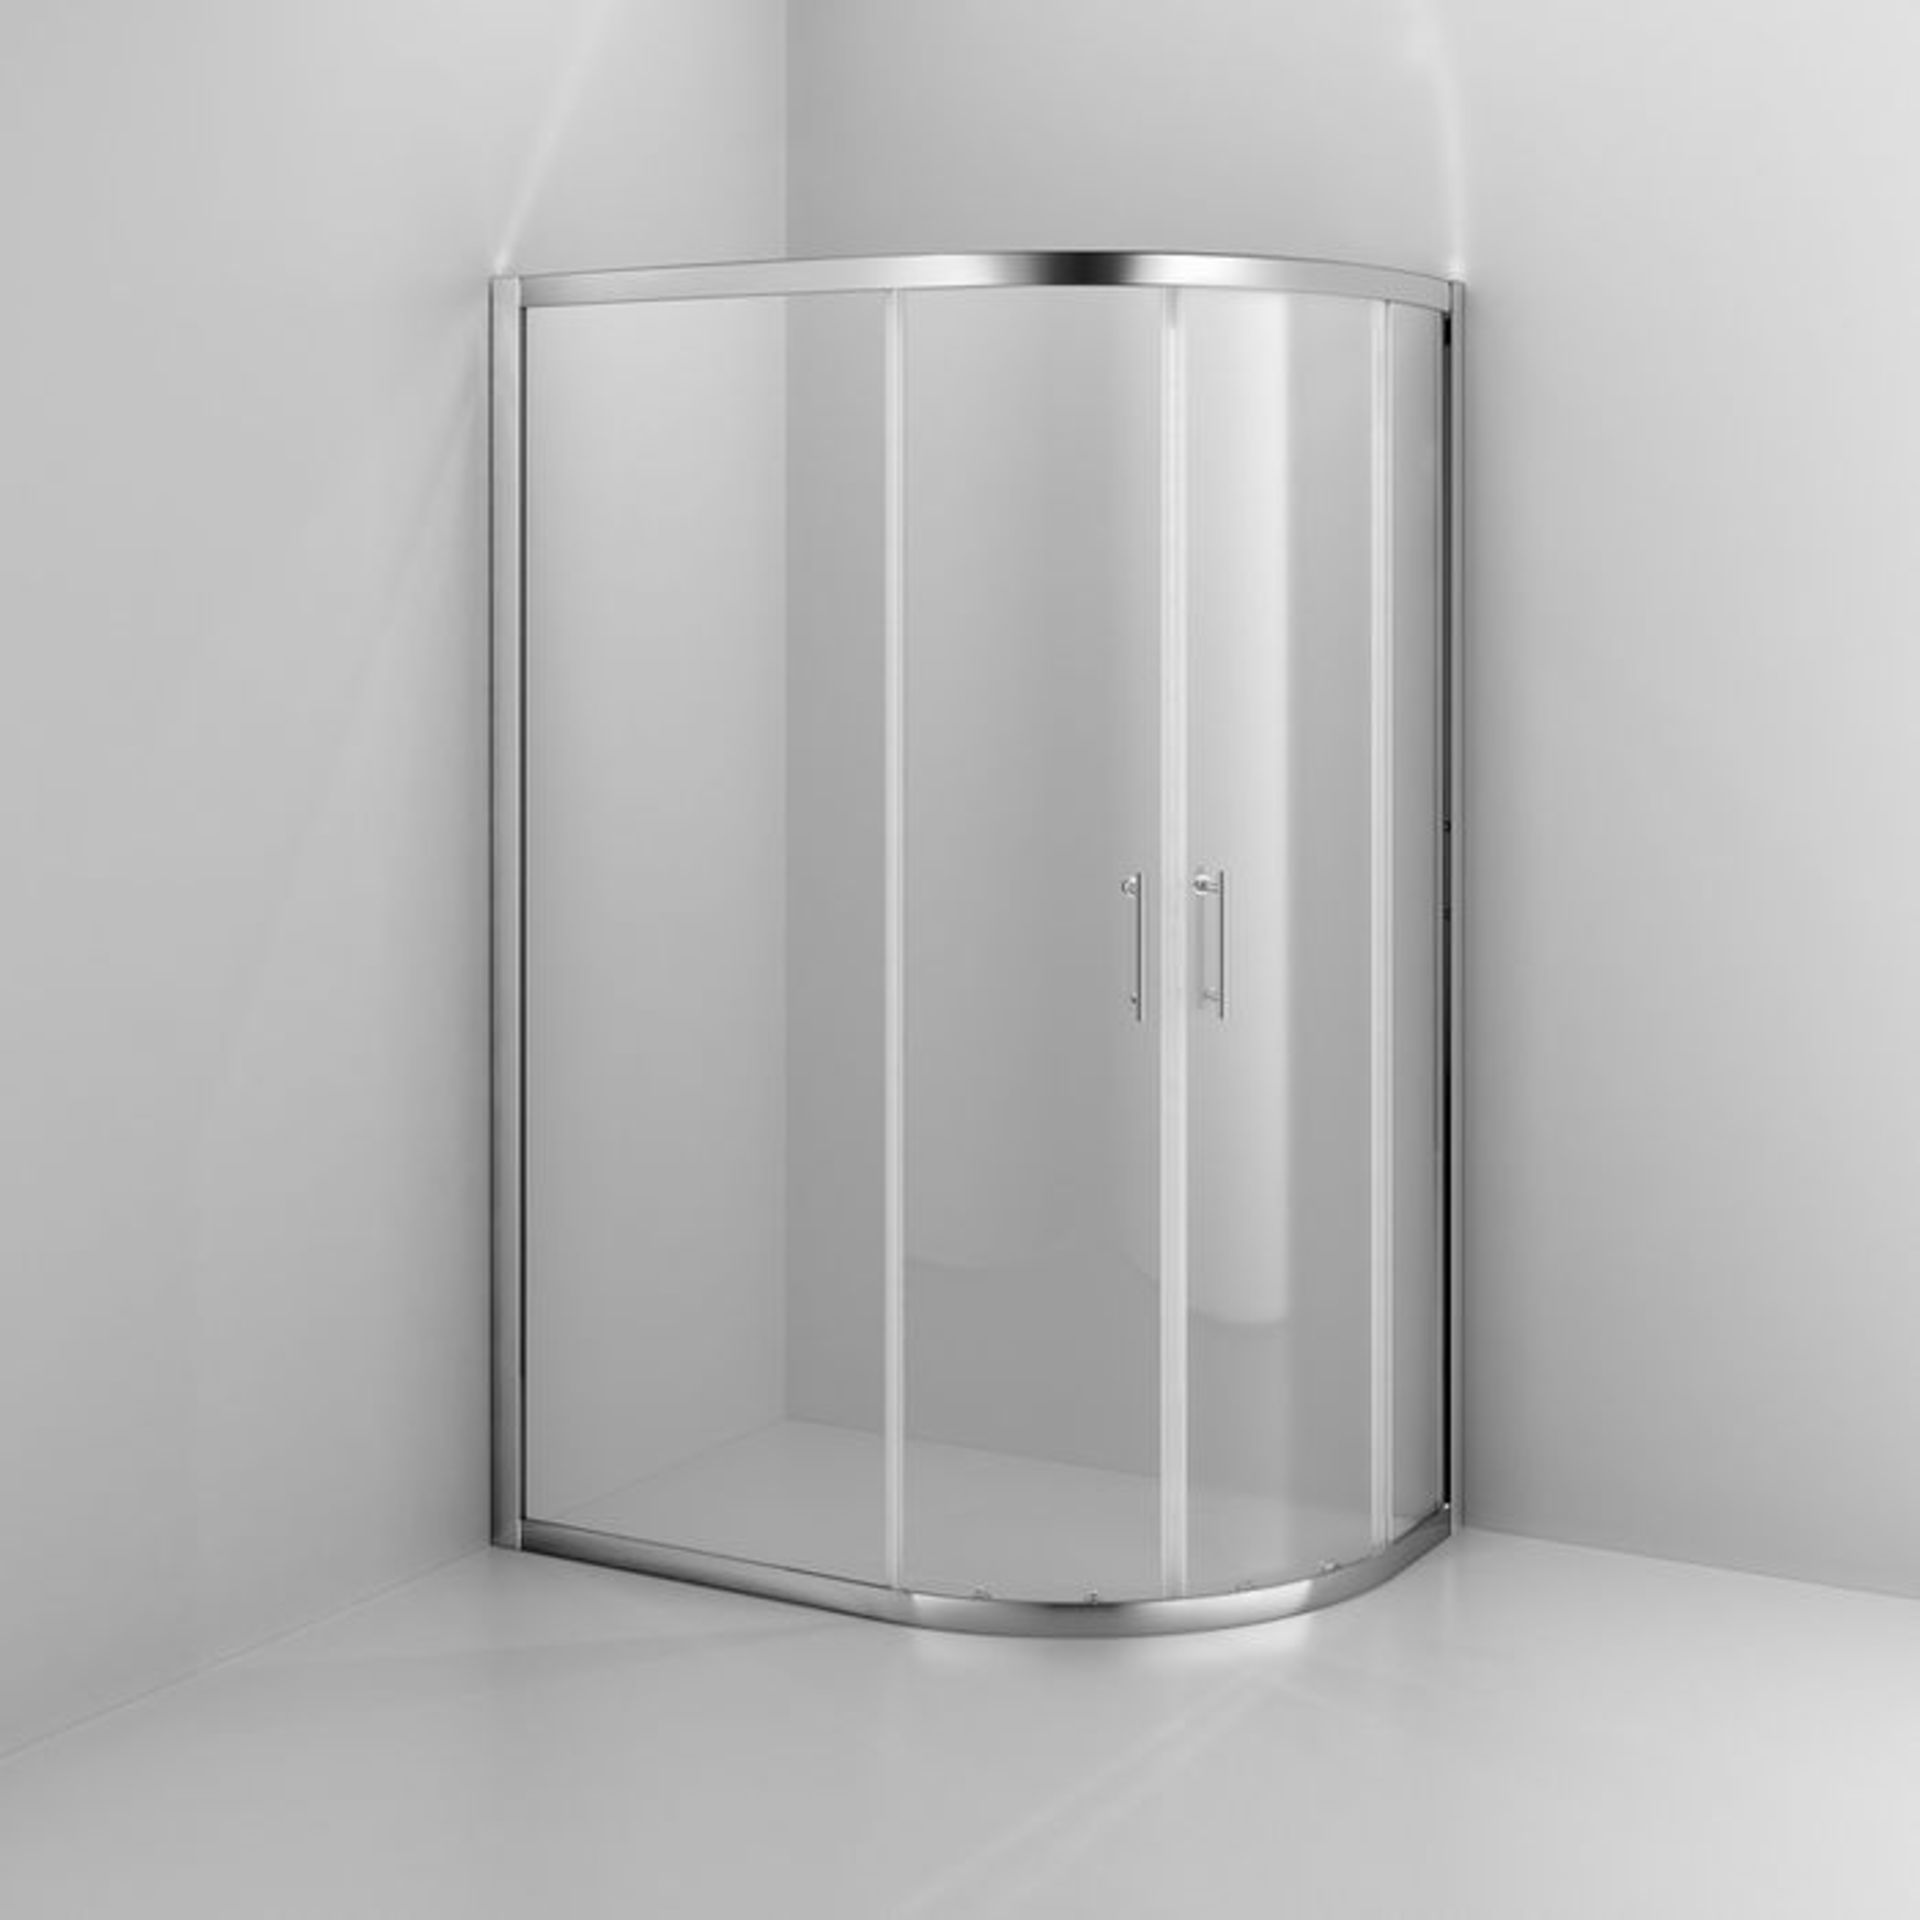 (P29) 800x1000mm - 6mm - Elements Offset Quadrant Shower Enclosure - Reversible. RRP £299.99. Our - Image 3 of 4